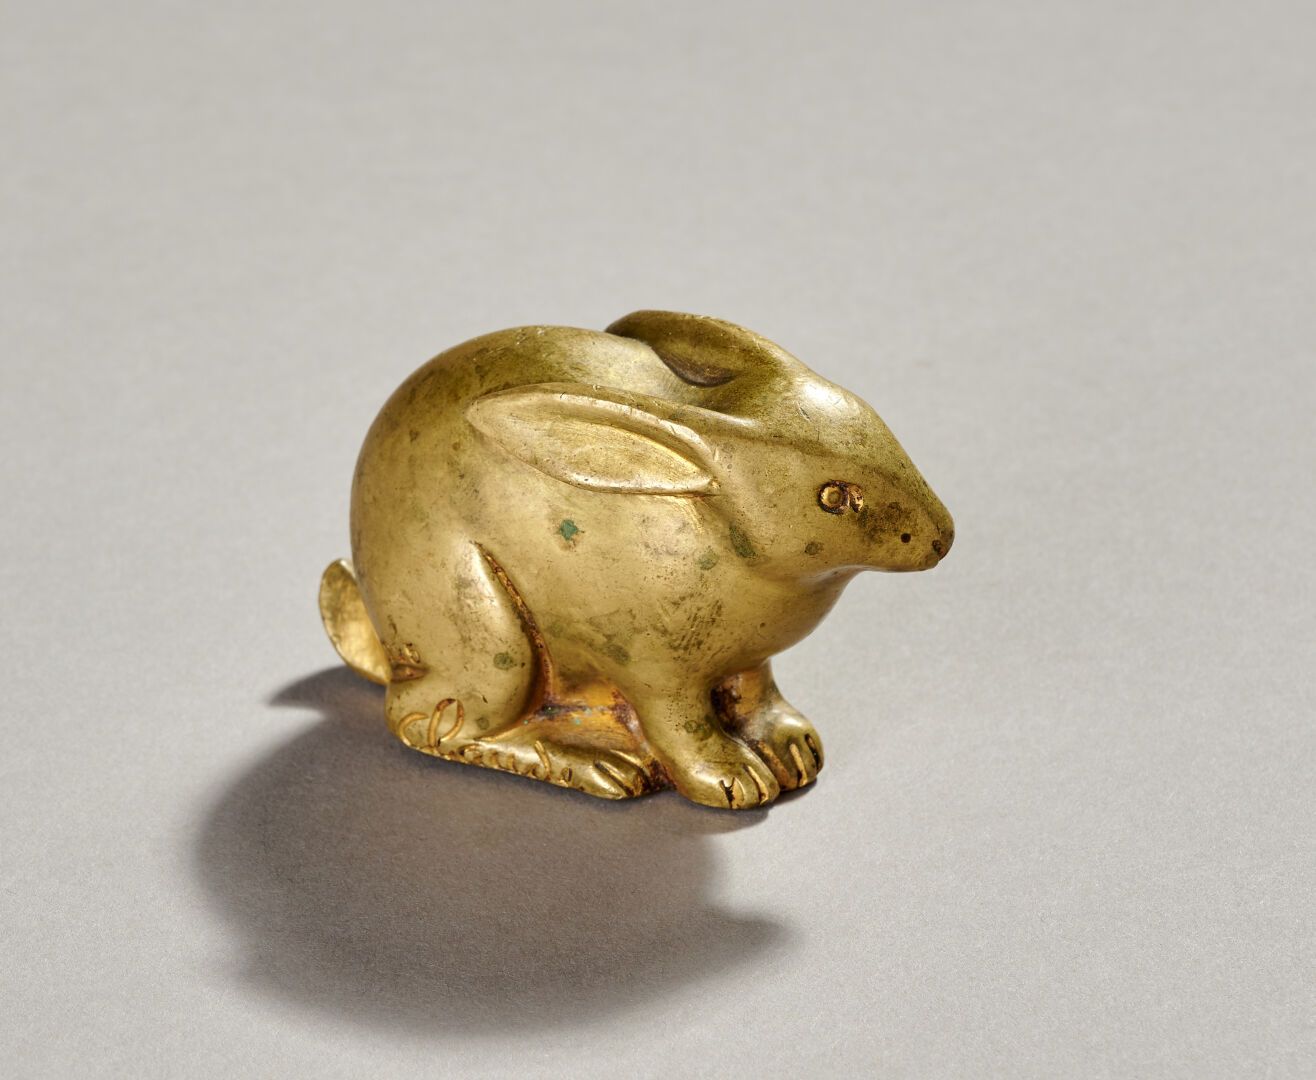 Null Marcel GUILLEMARD (1887-1966)

"Claude Rabbit".

Objeto de bronce con pátin&hellip;